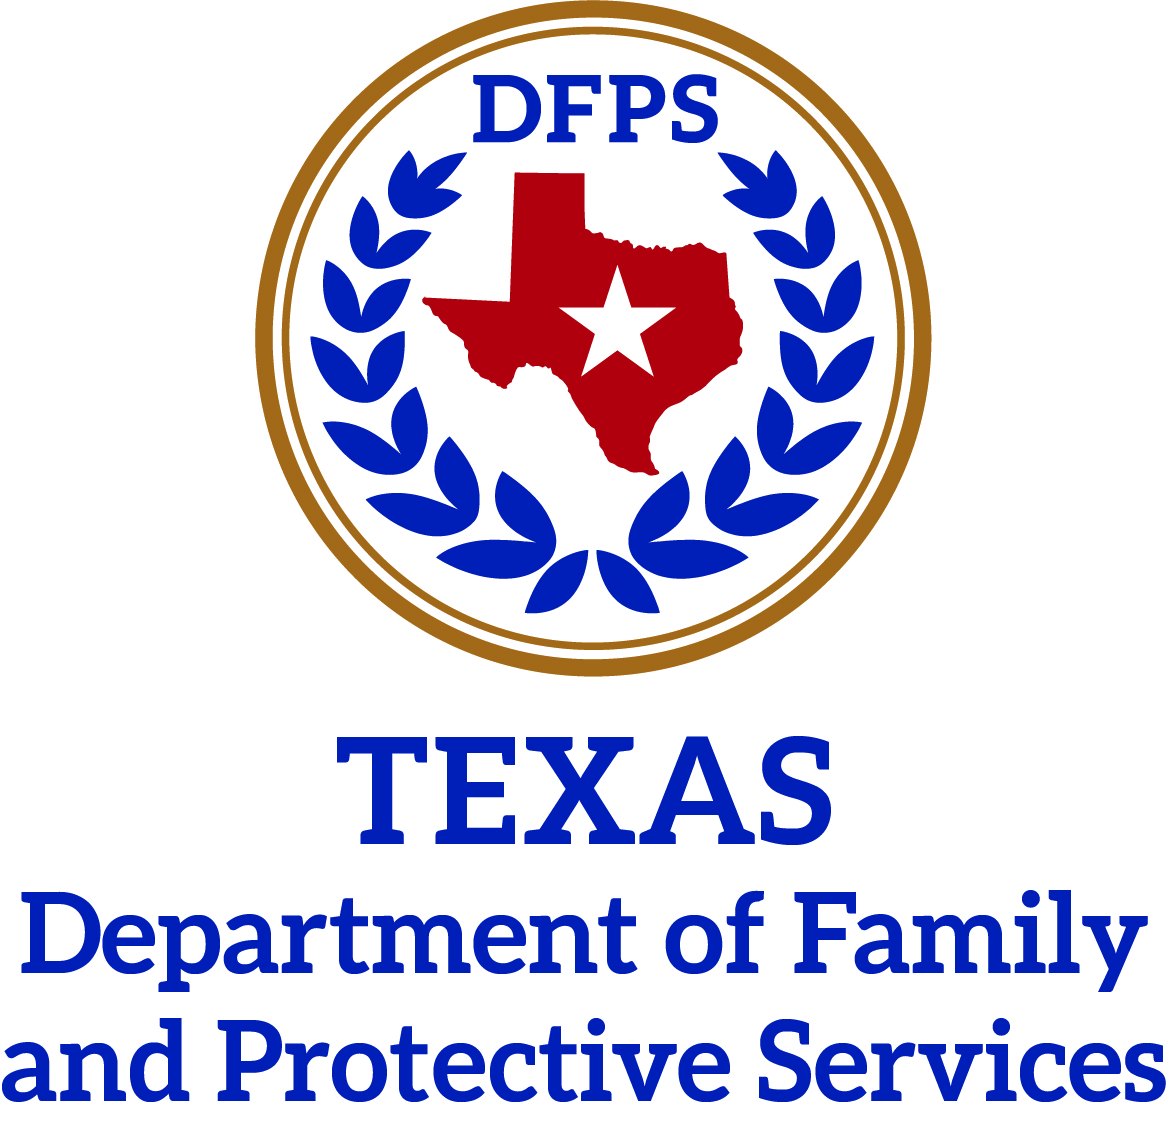 DFPS logo